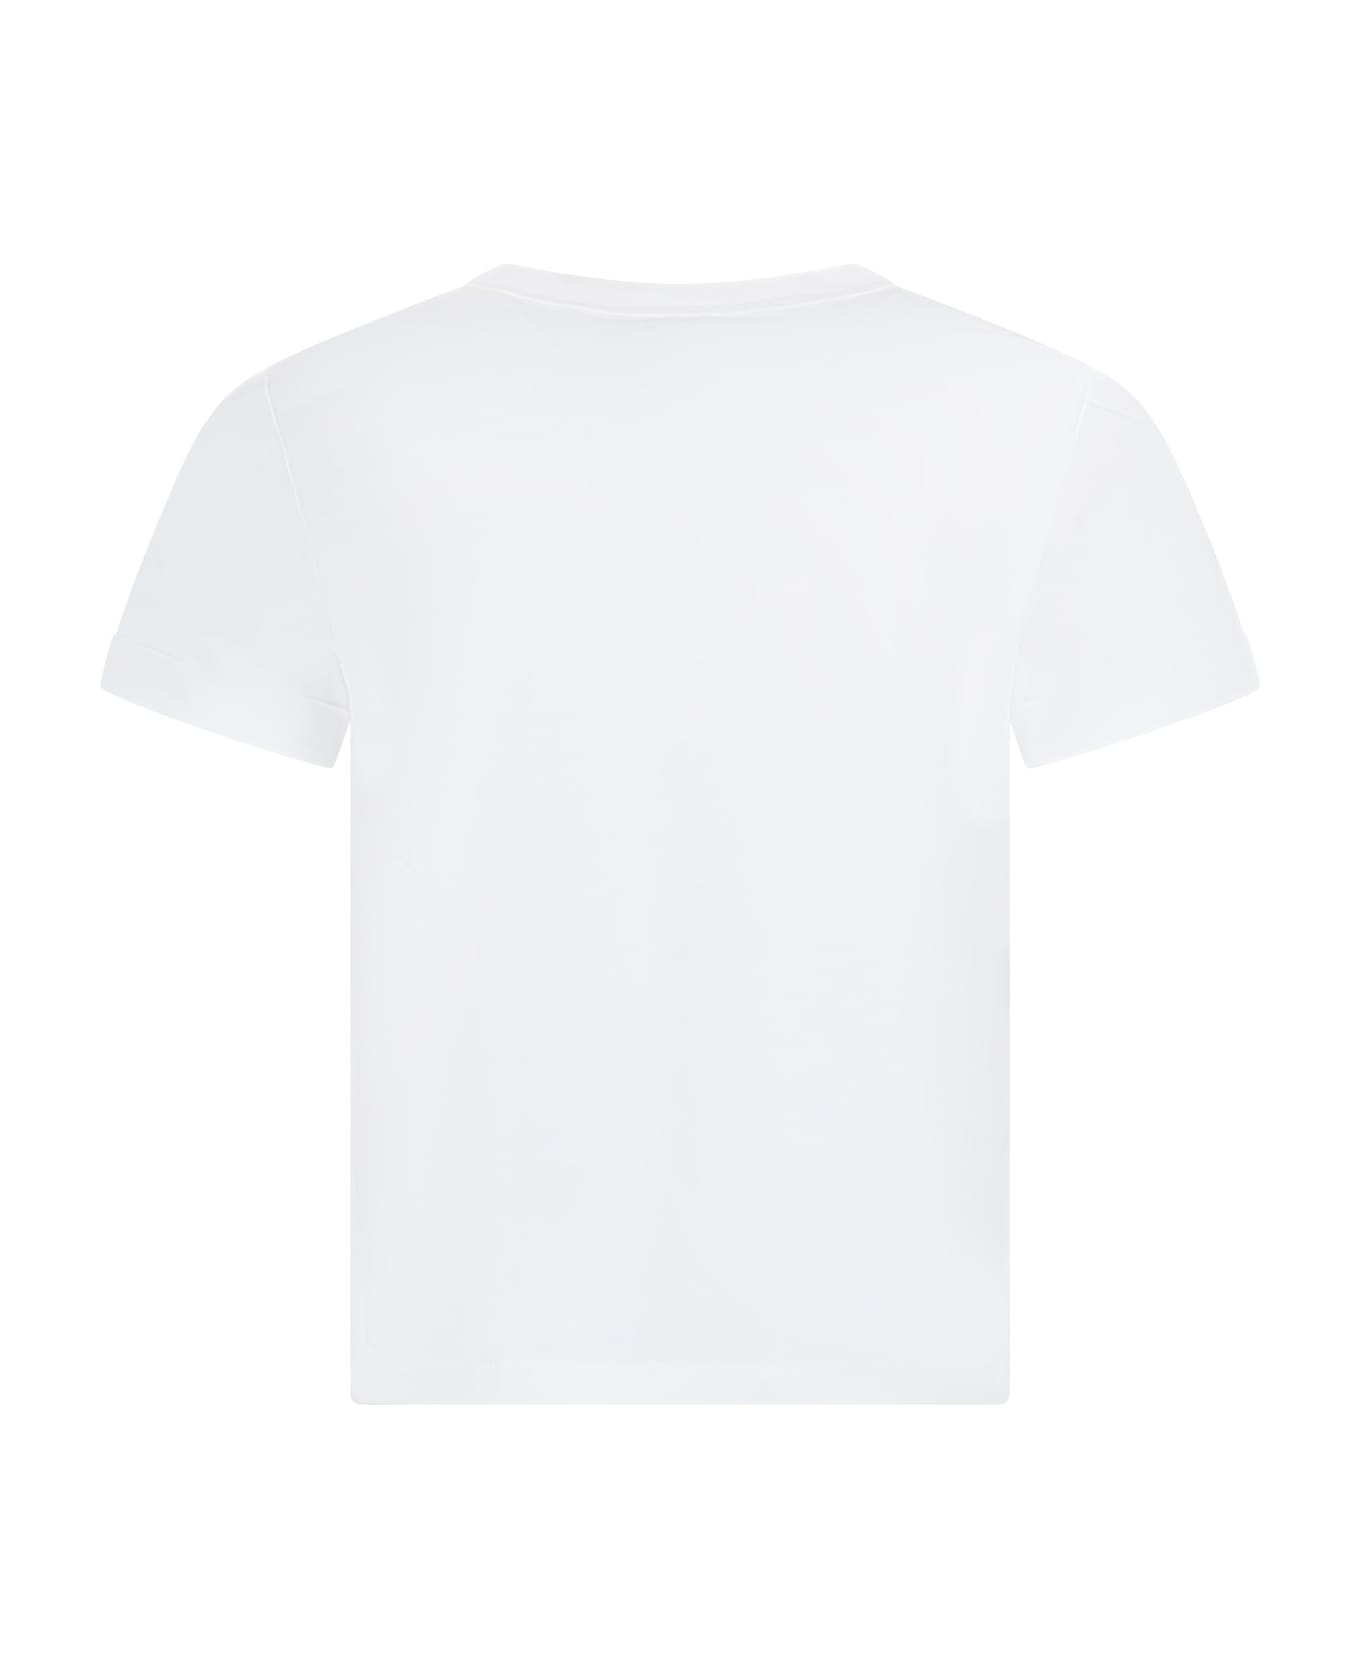 Stella McCartney Kids White T-shirt For Girl With Flower Print - Ivory